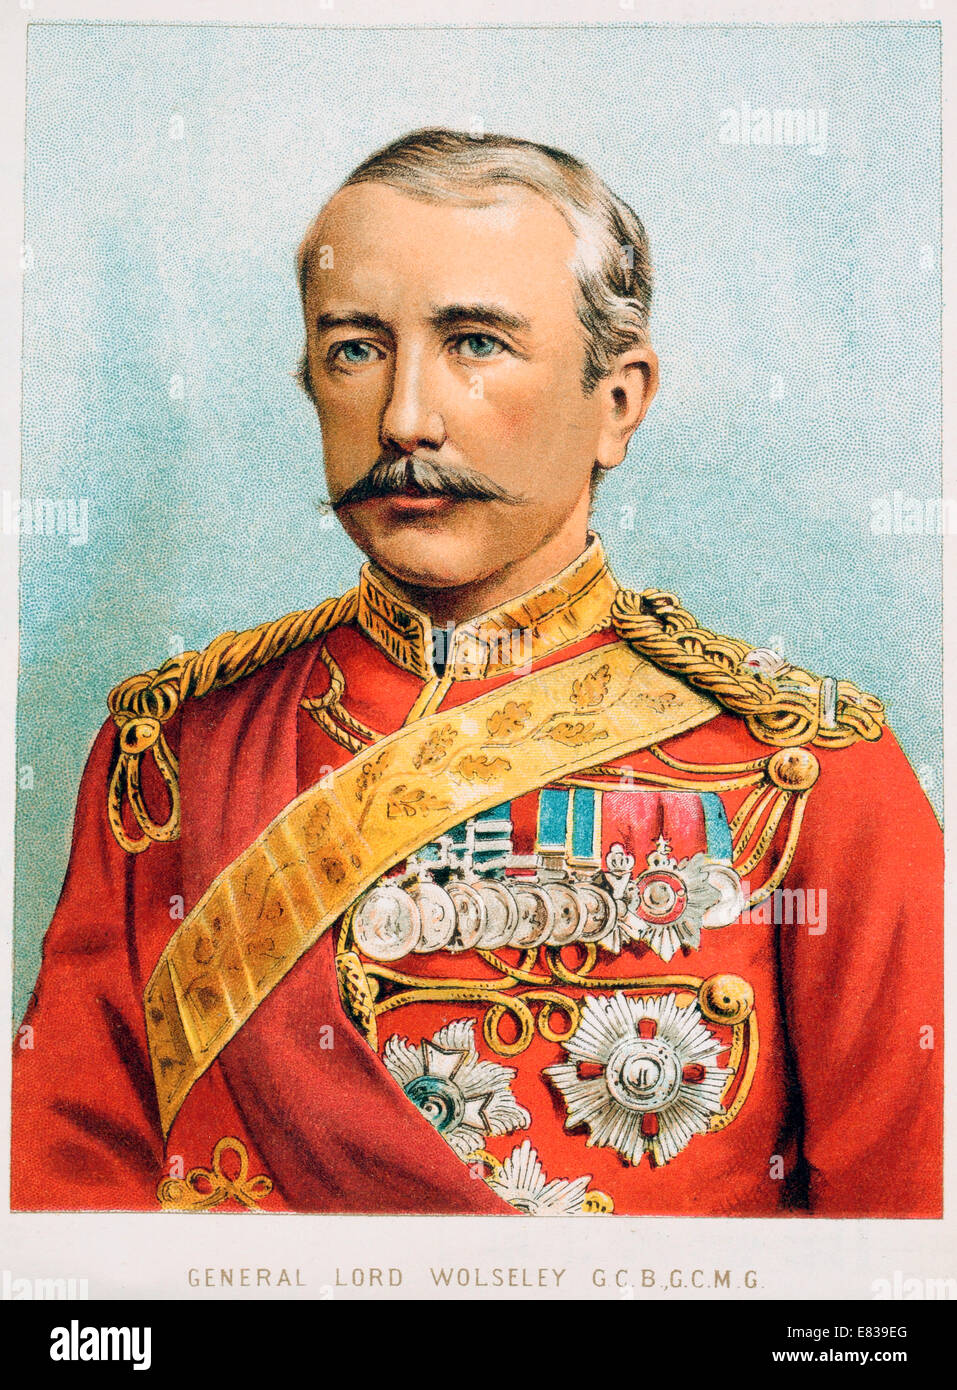 Litografía General Lord Sir Garnet Wolseley G C B G C M G circa 1885 Foto de stock